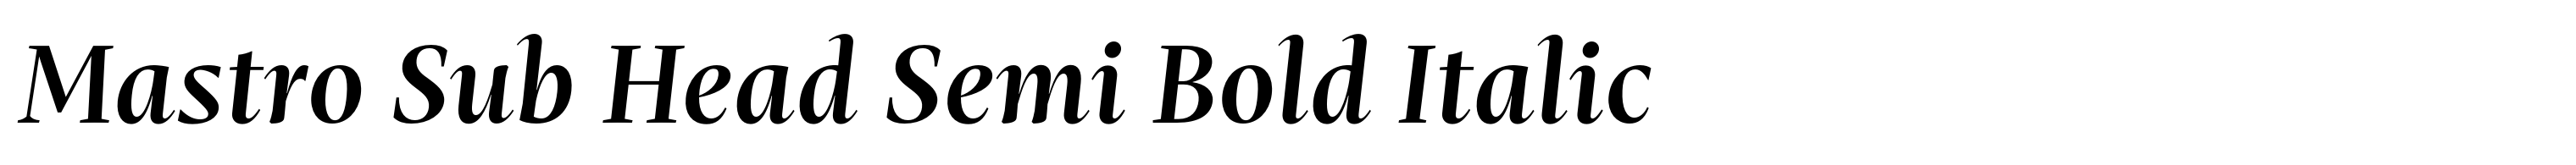 Mastro Sub Head Semi Bold Italic